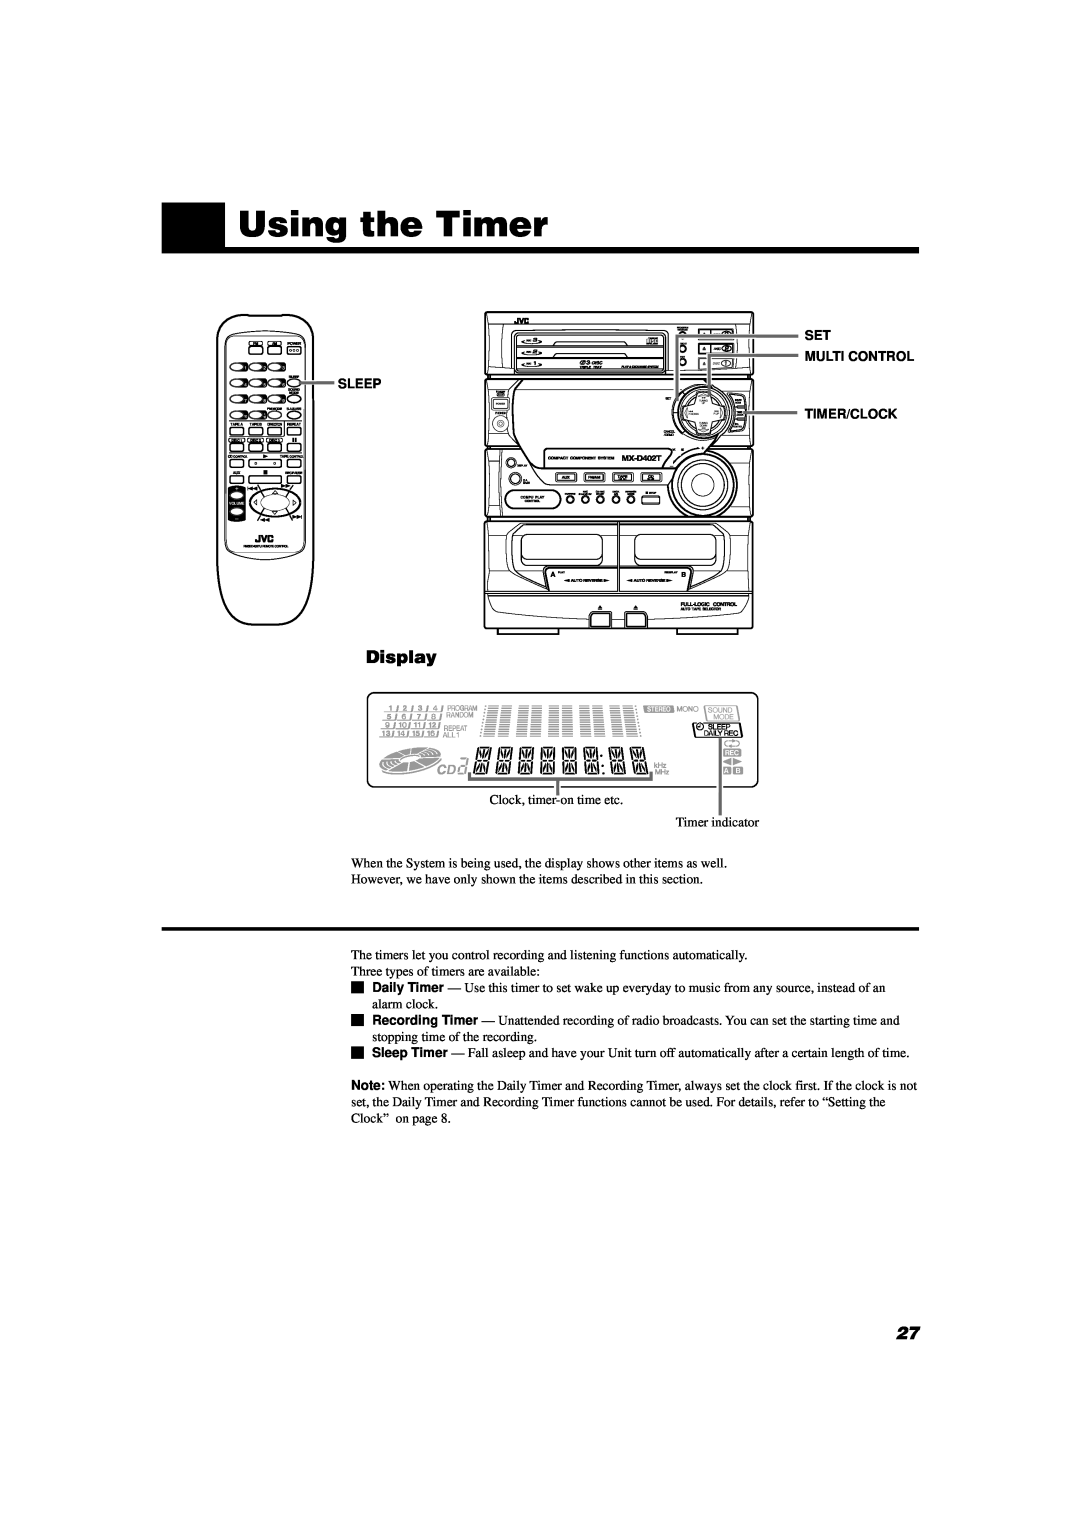 JVC MX-D402T manual Using the Timer, Sleep, Set Multi Control Timer/Clock 